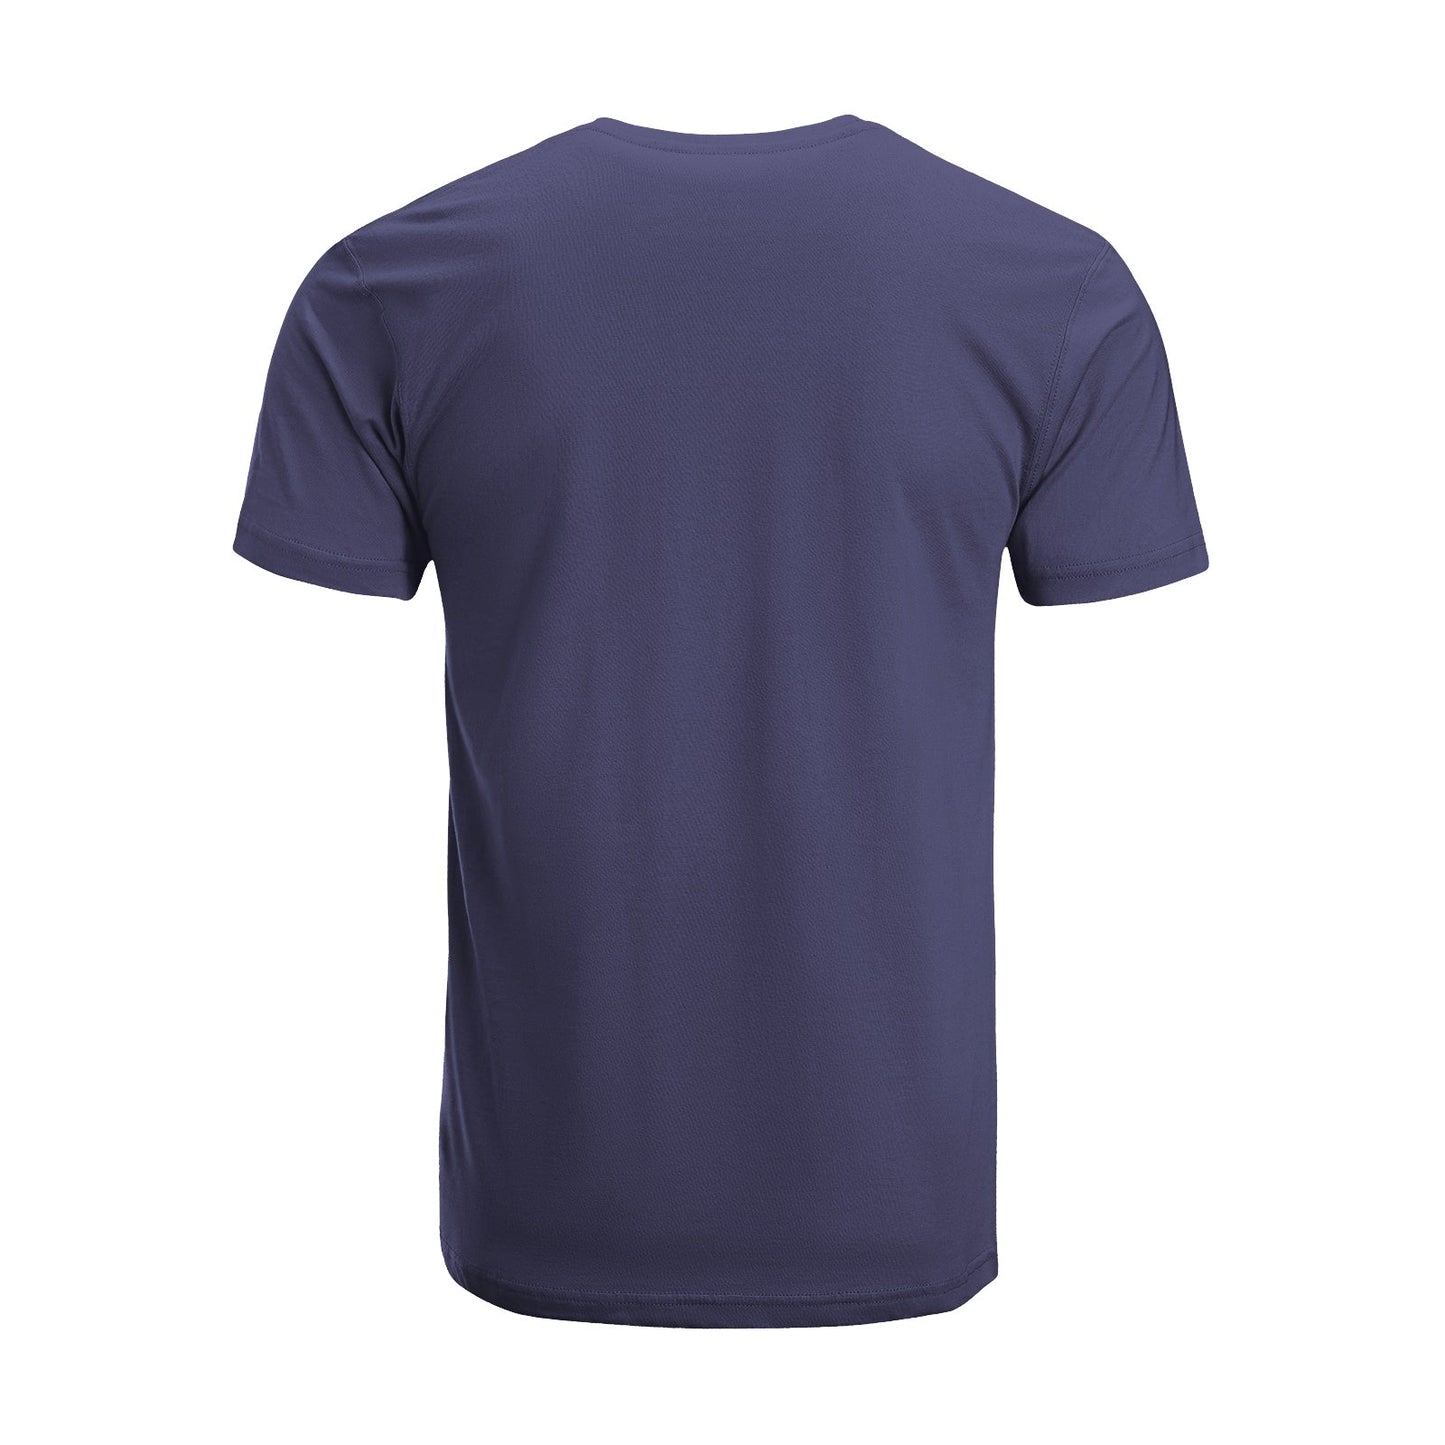 Unisex Short Sleeve Crew Neck Cotton Jersey T-Shirt CAT 46 - Tara-Outfits.com